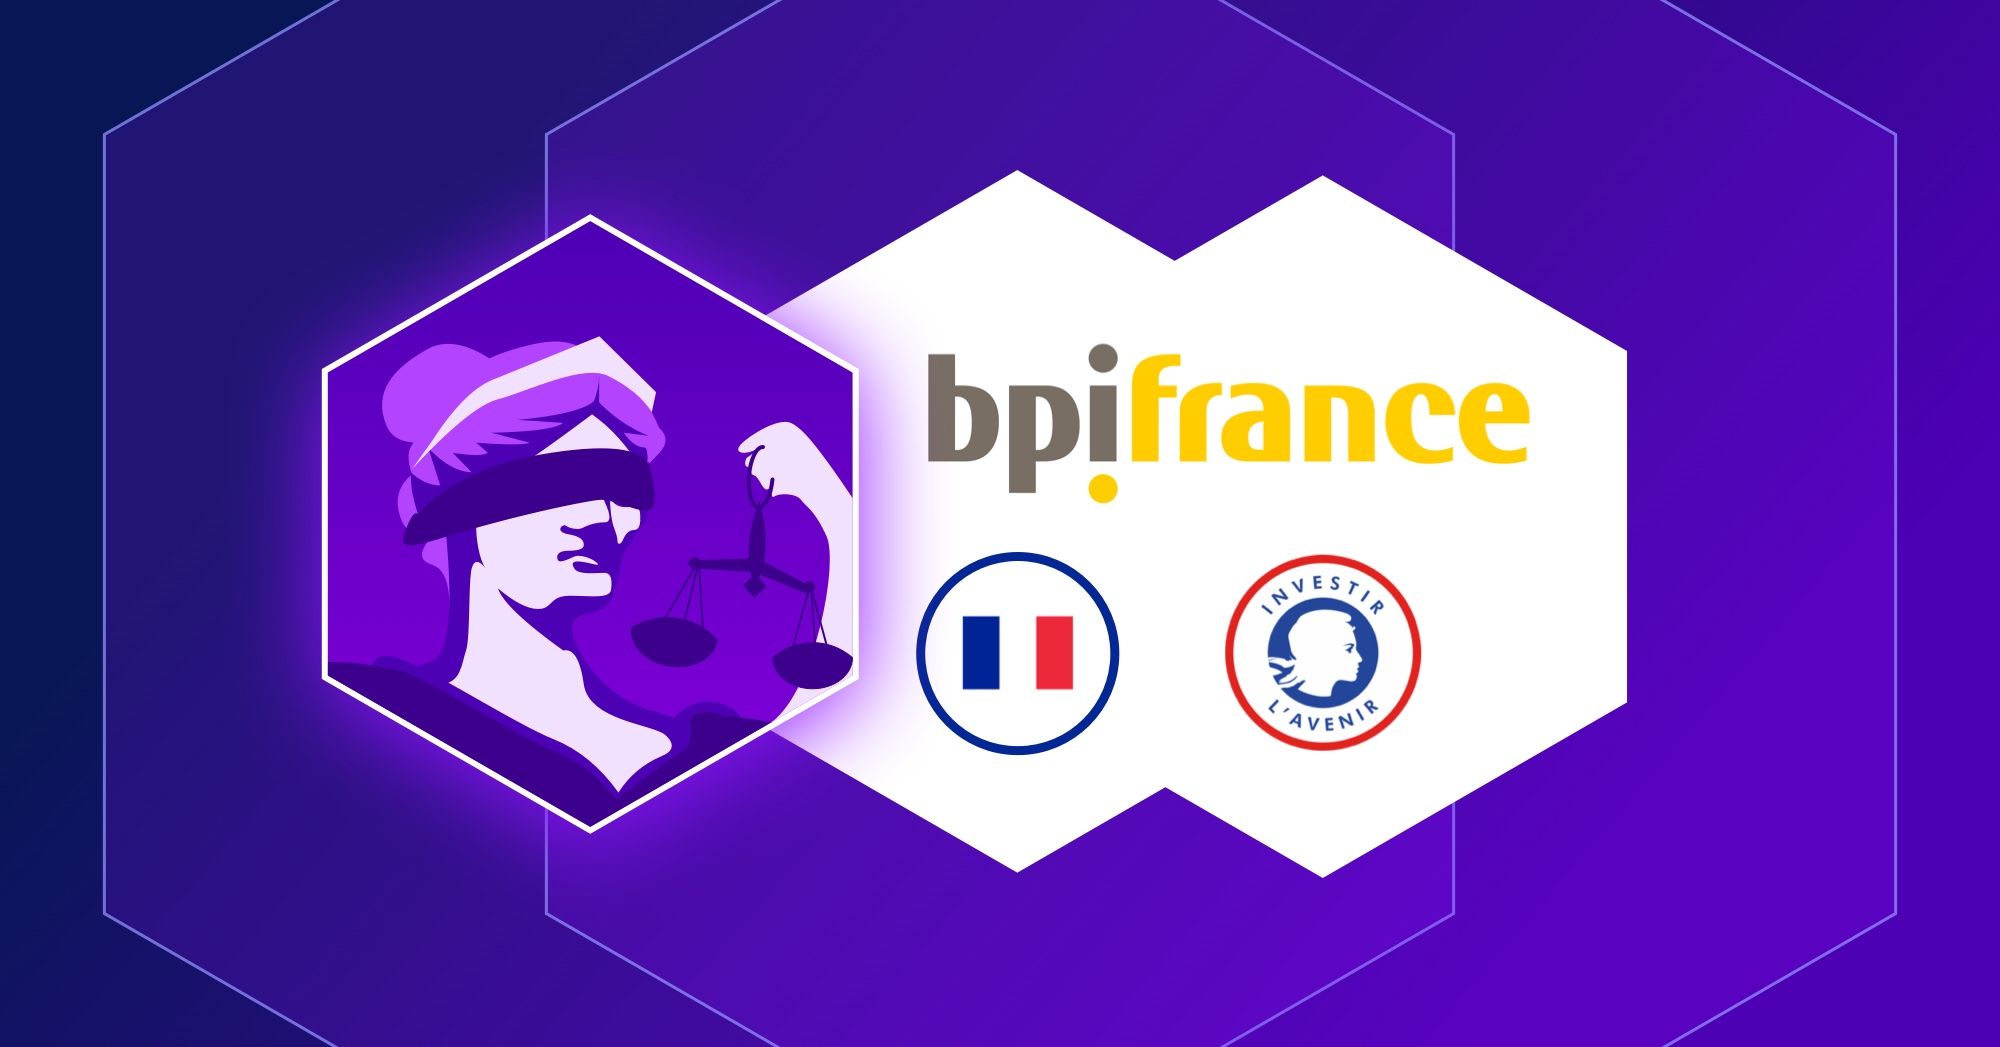 Kleros Receives BPI France Innovation Grant